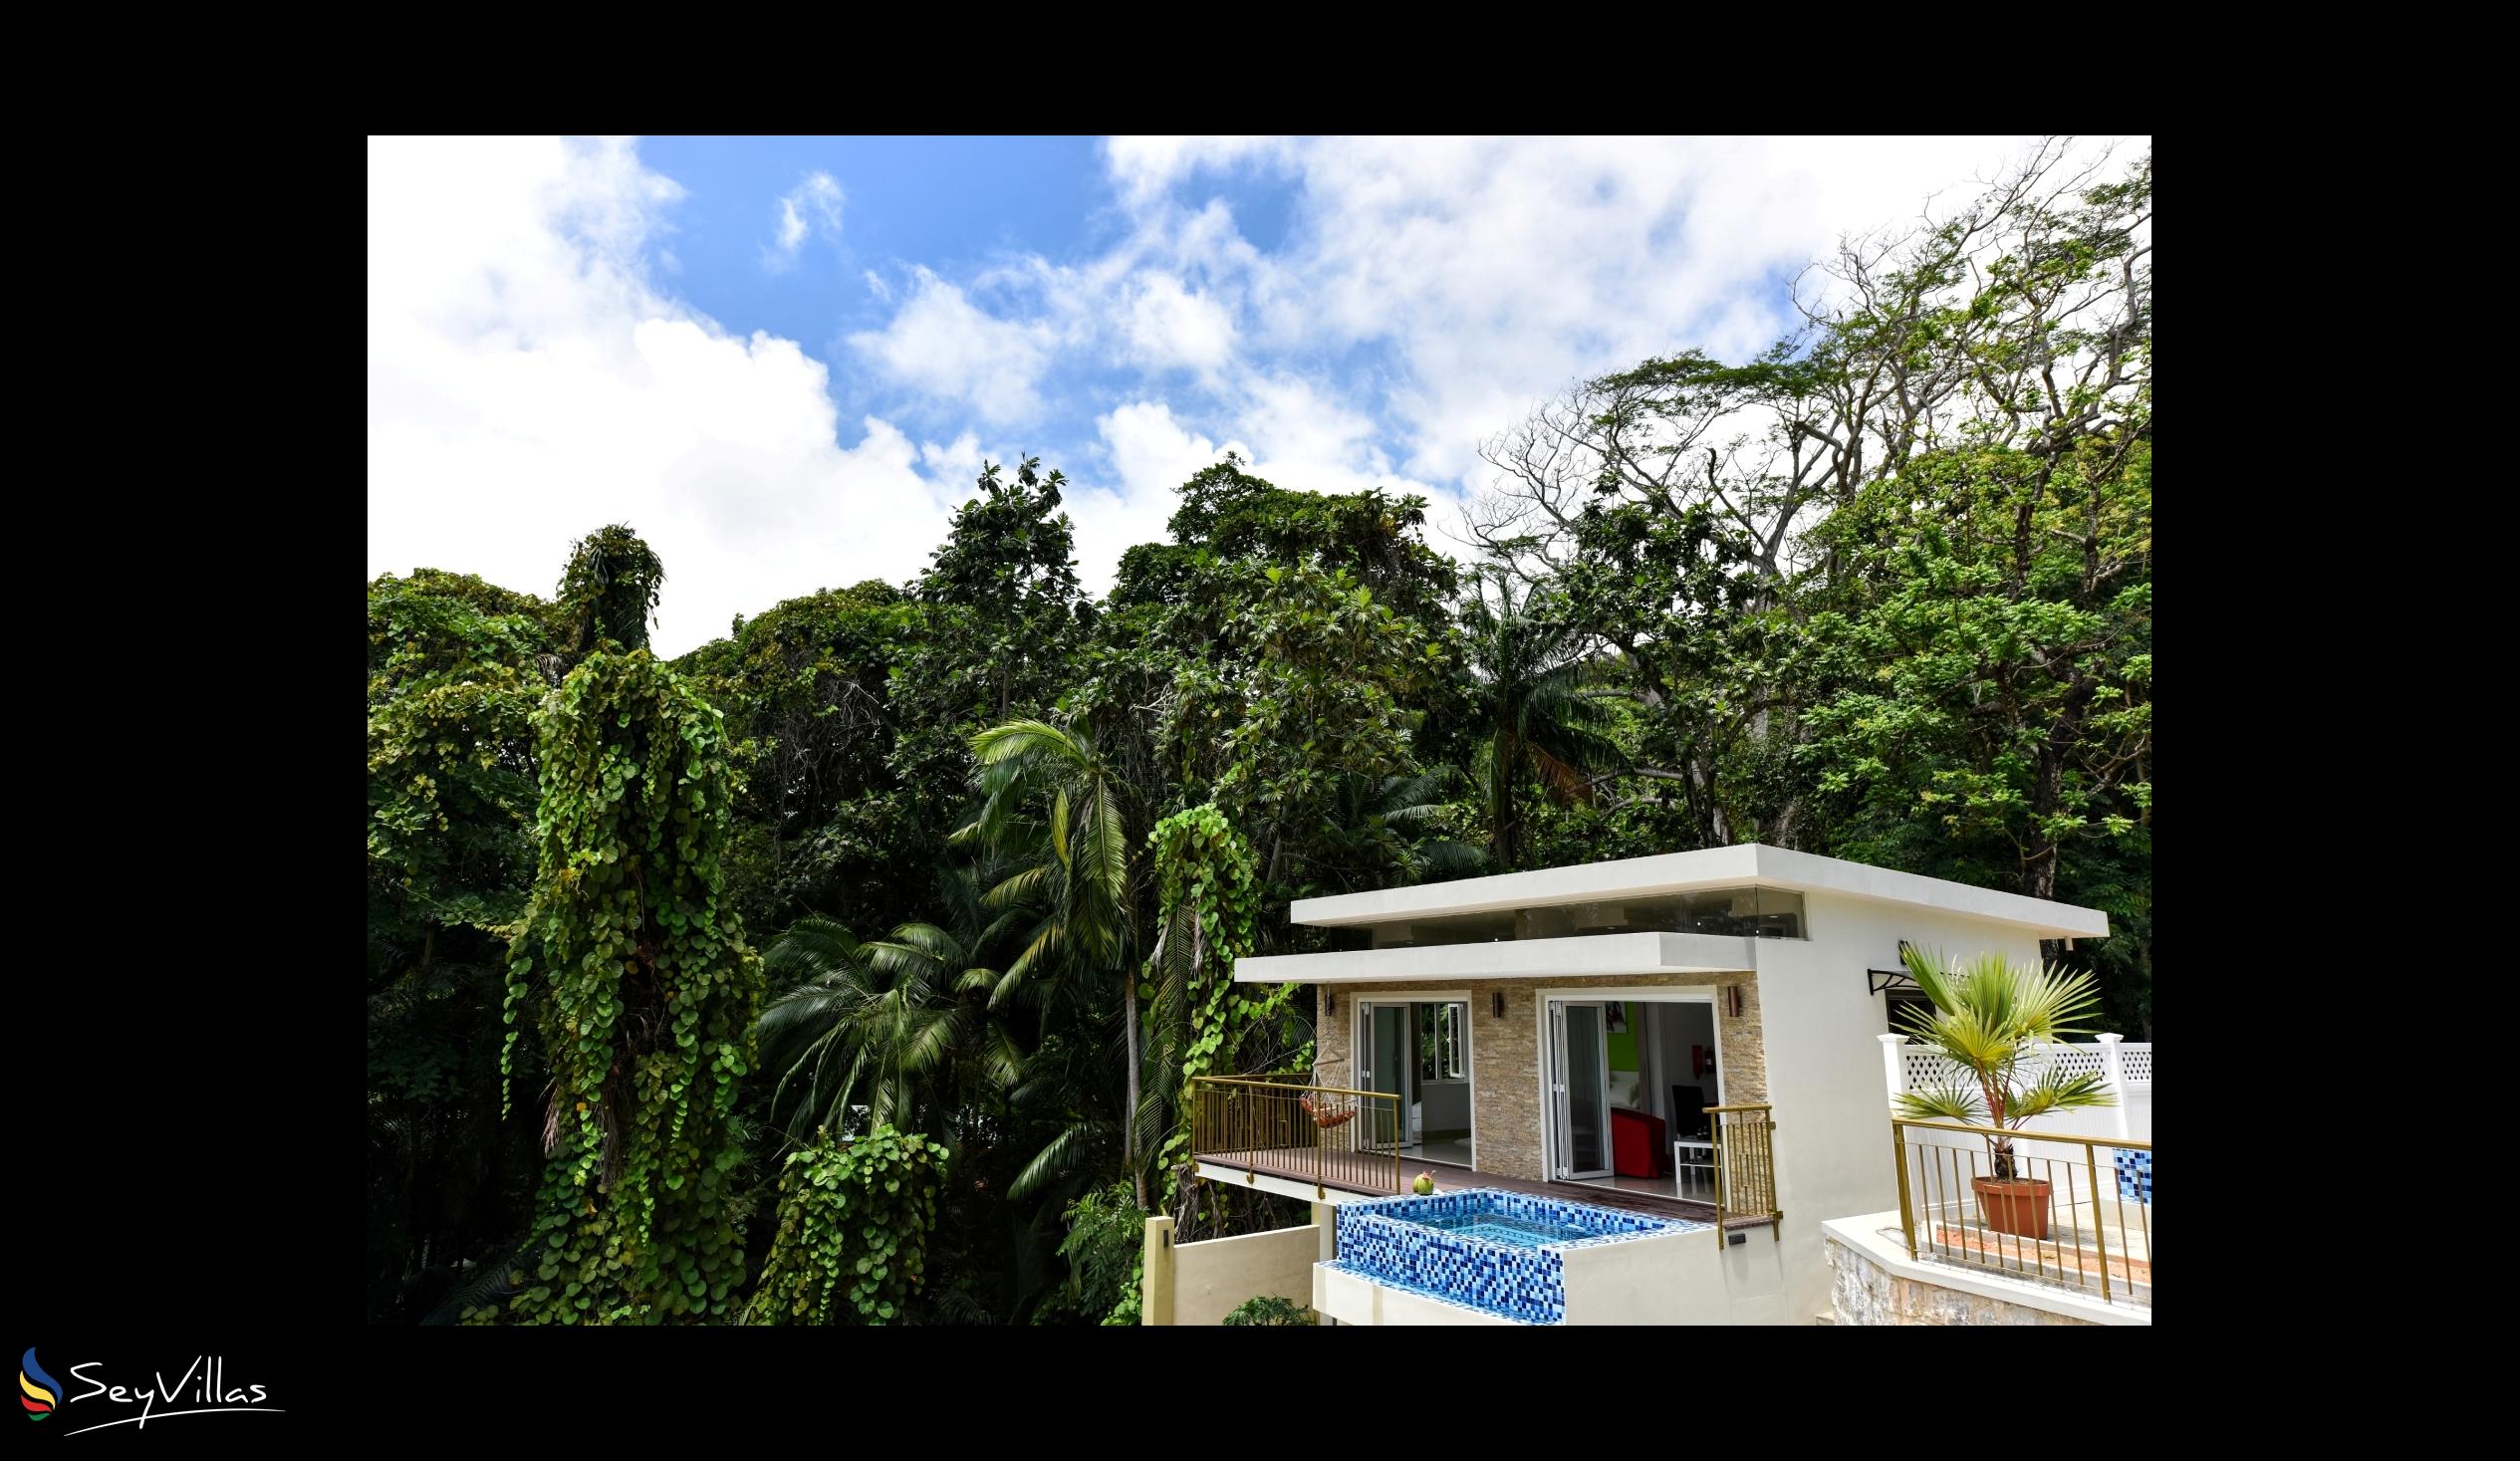 Photo 2: Moulin Kann Villas - Outdoor area - Mahé (Seychelles)